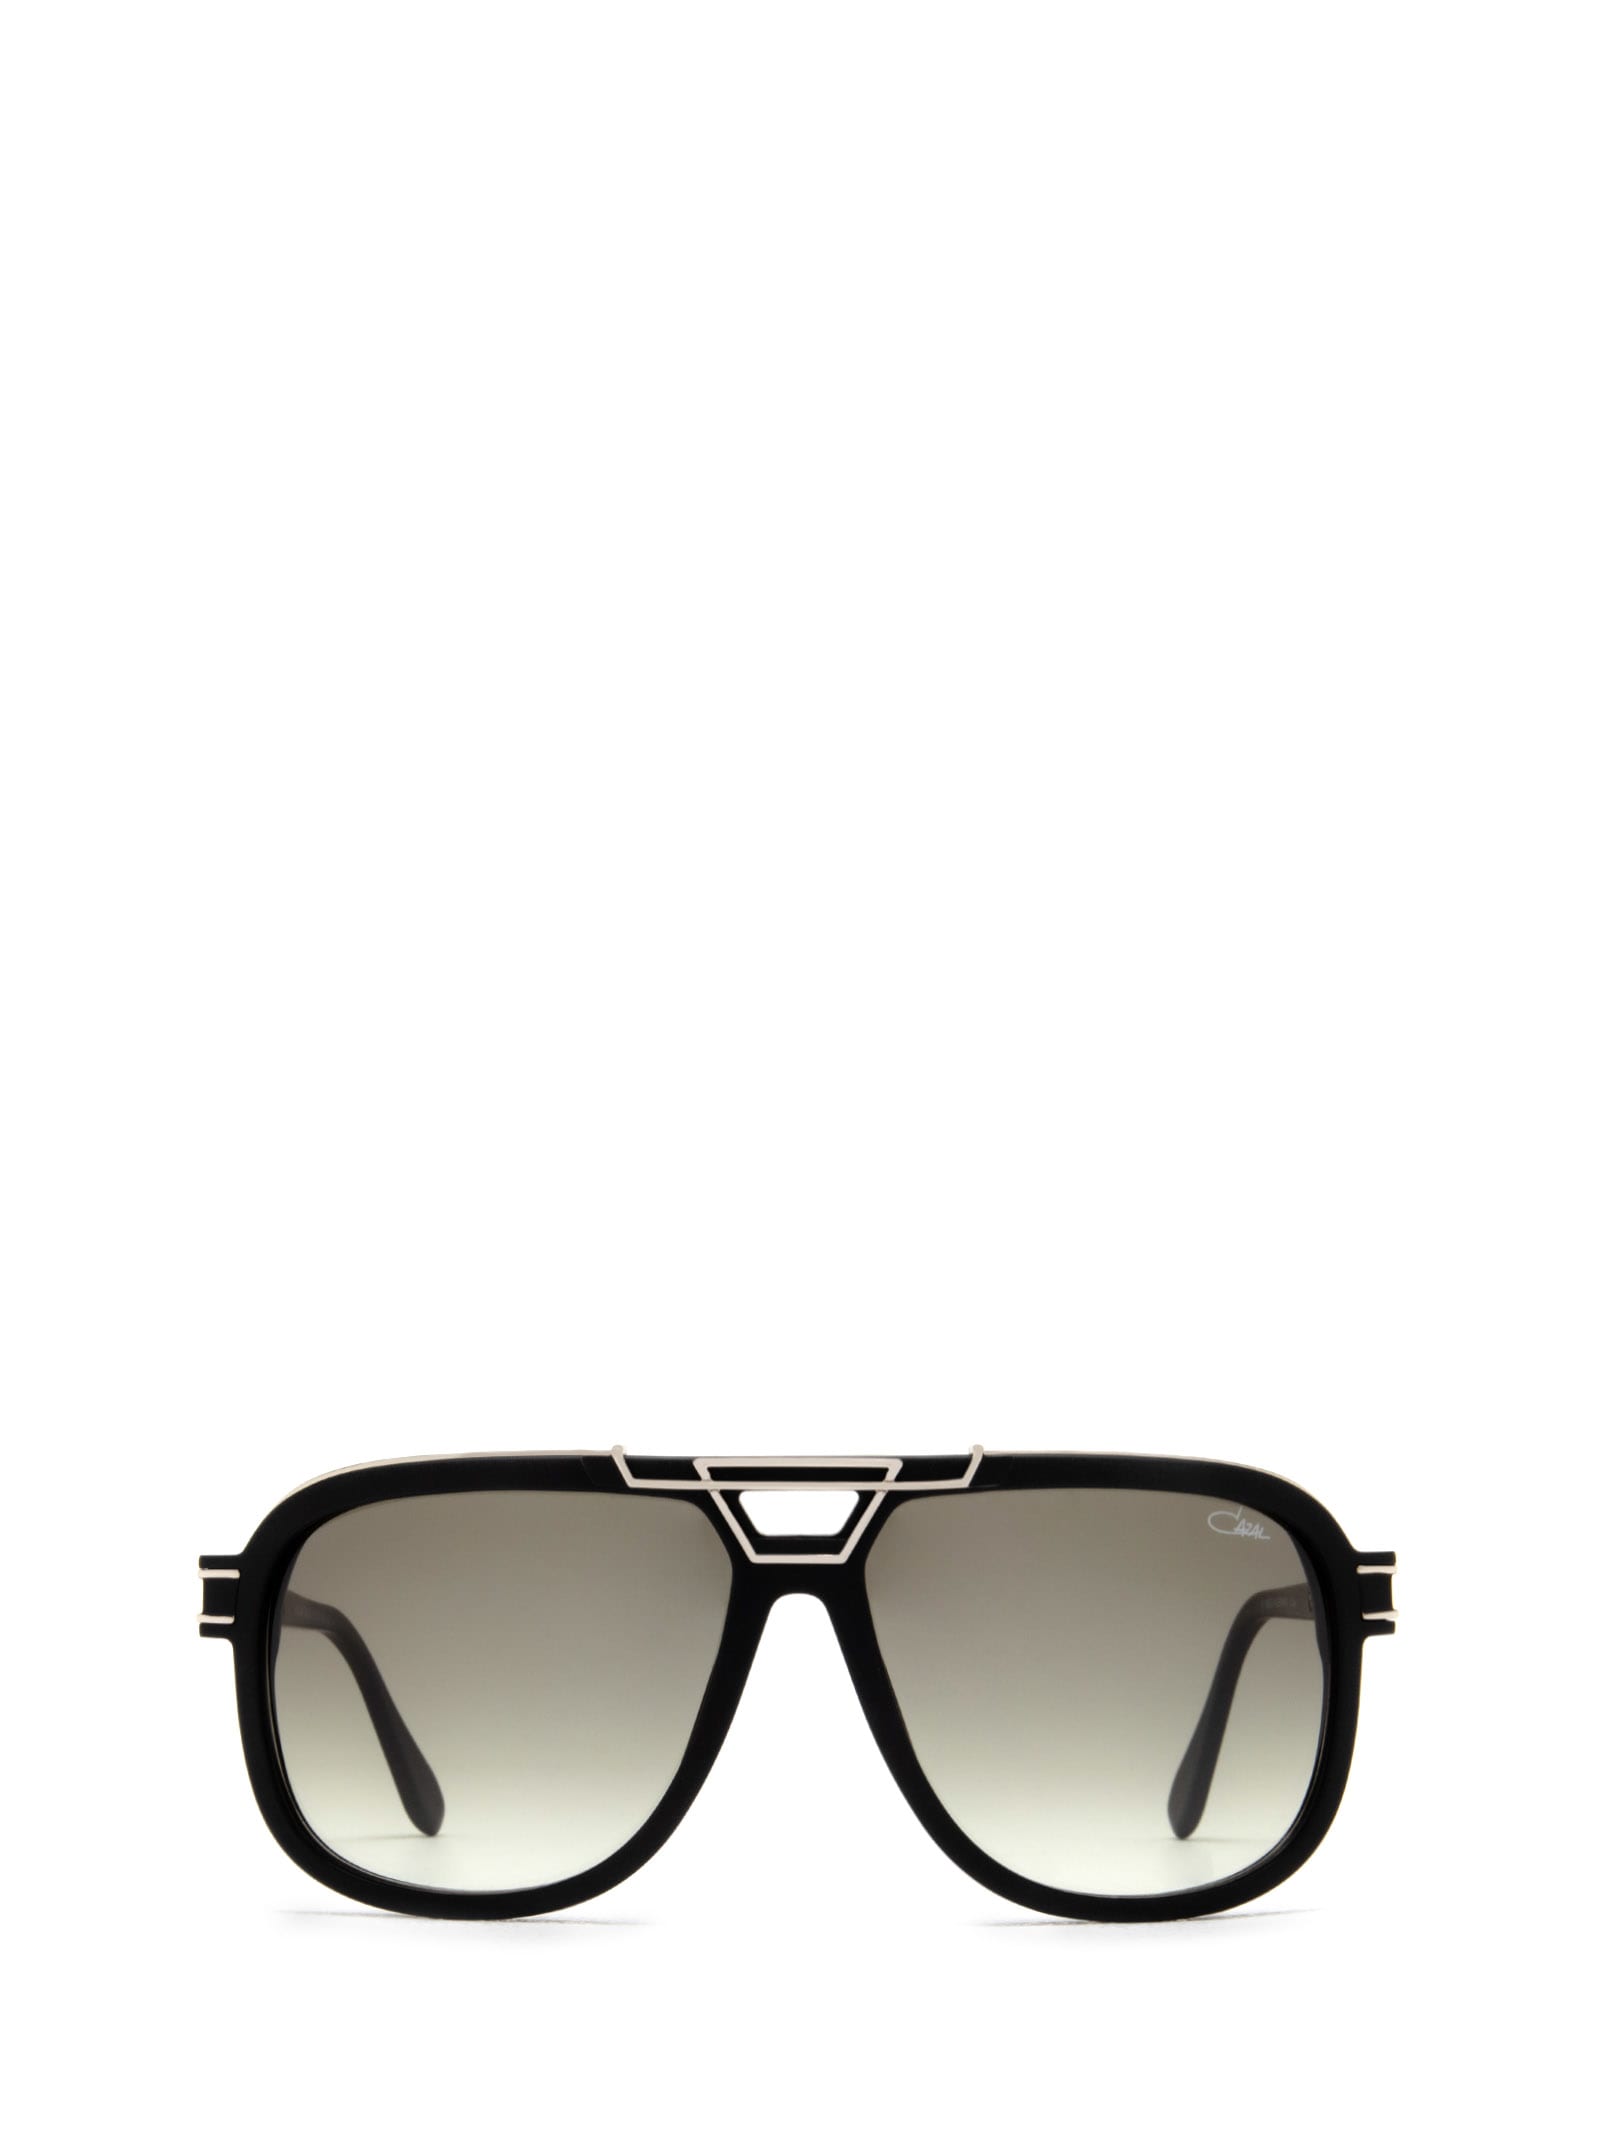 Cazal 8044 Black - Silver Mat Sunglasses